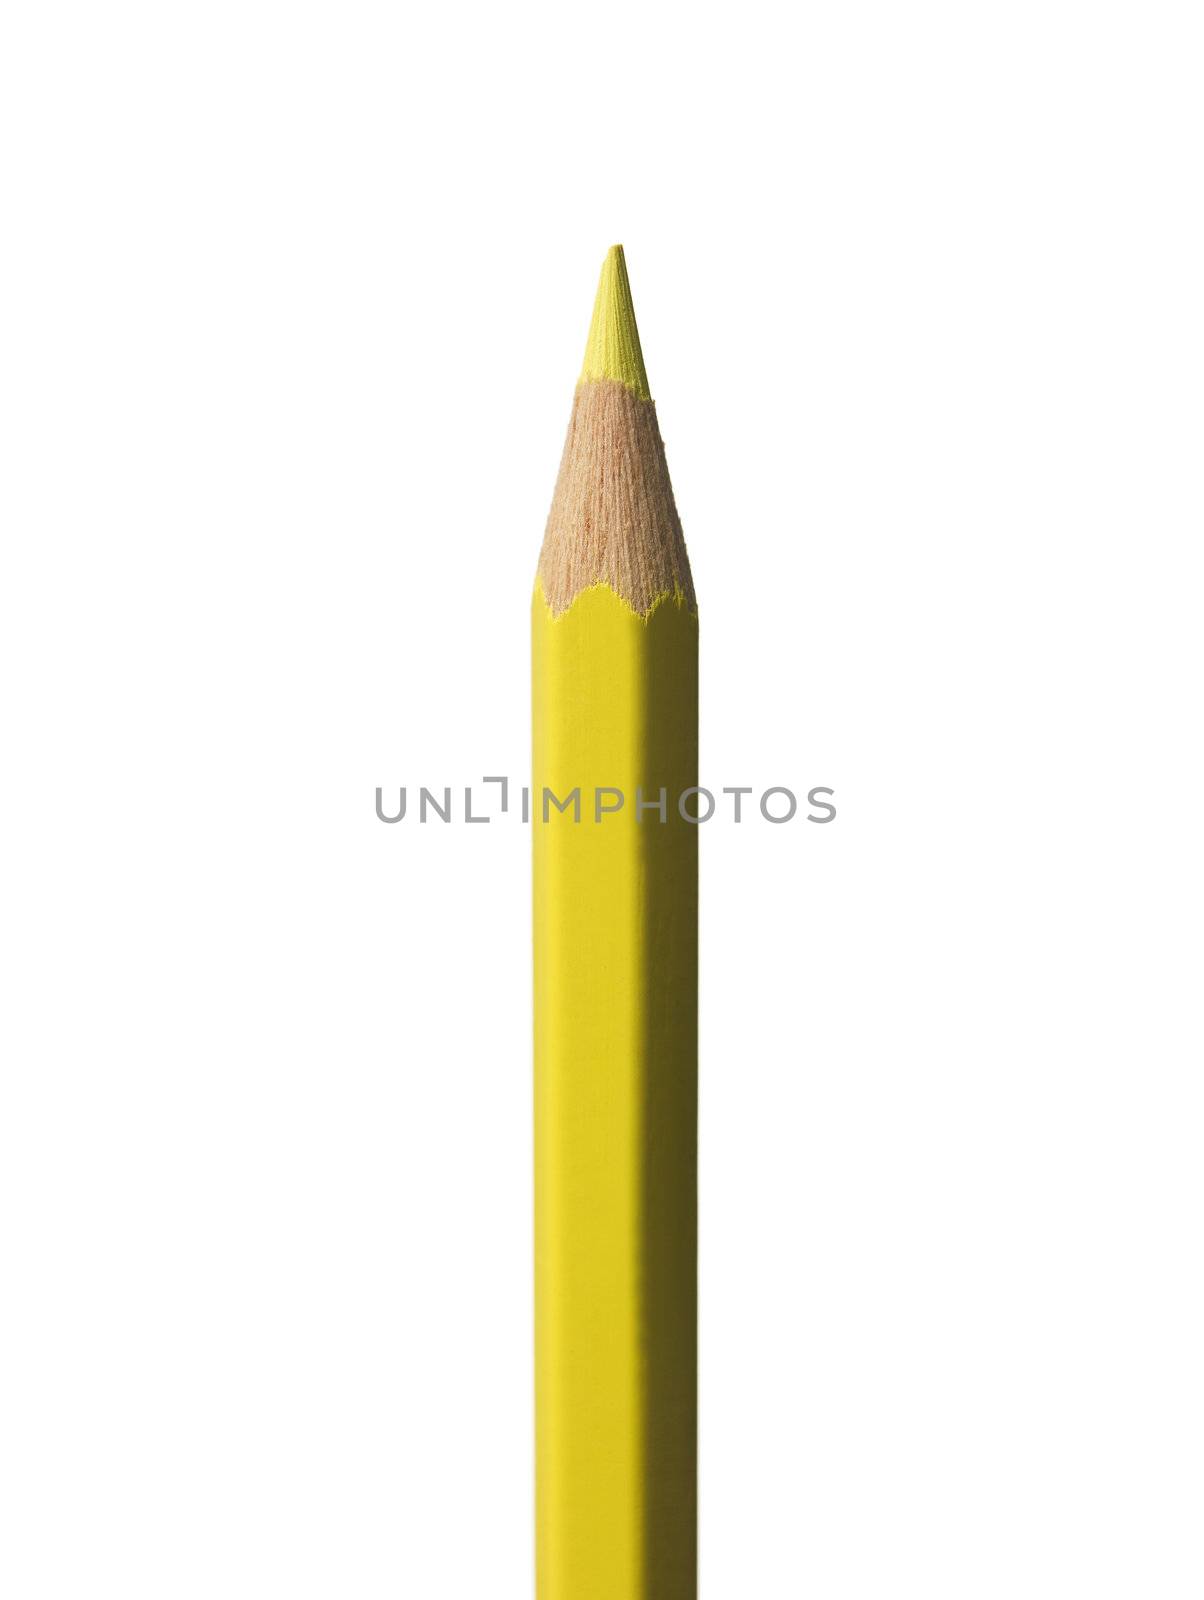 Colored pencil by gemenacom